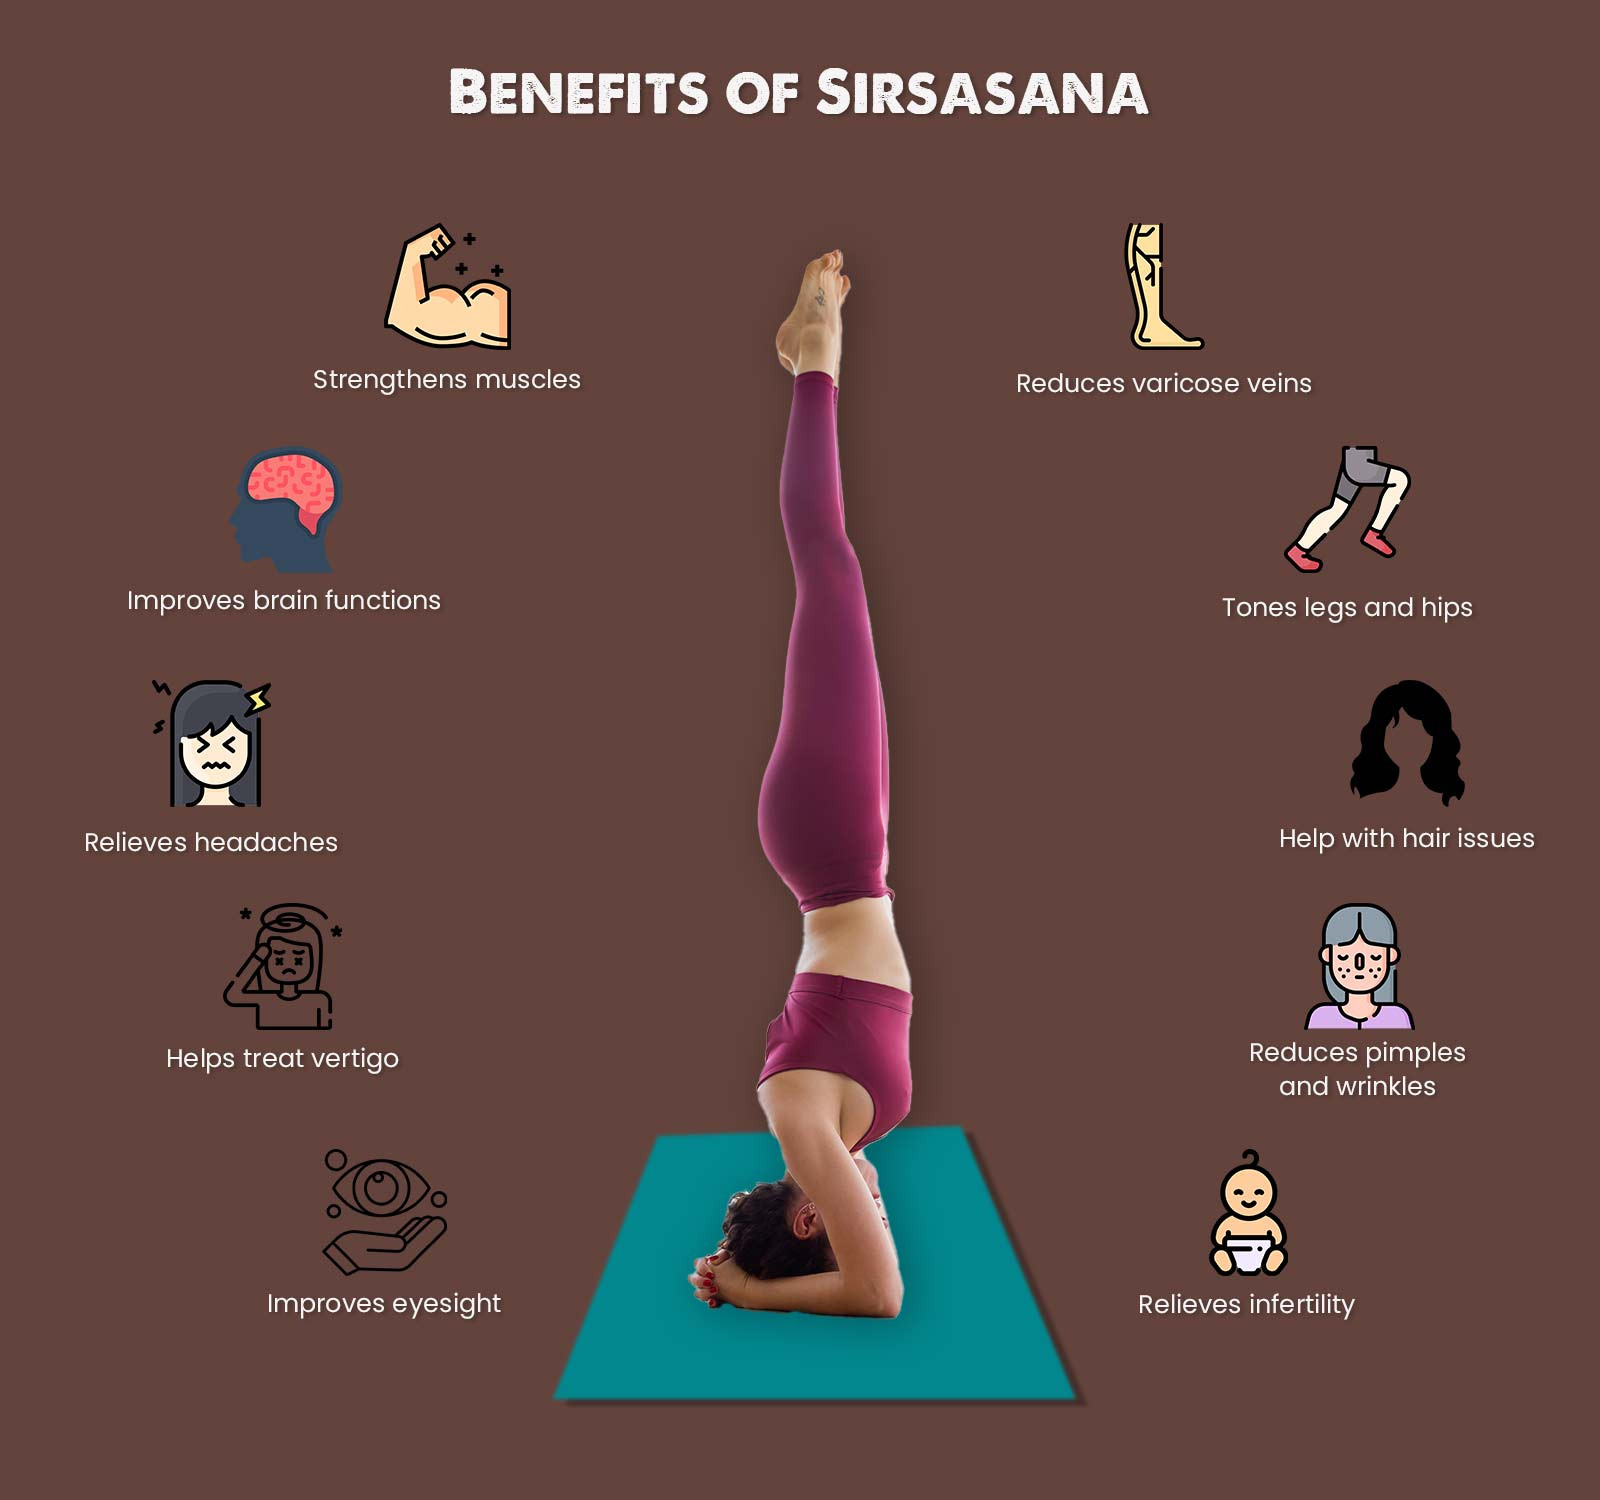 10 Benefits of Sirsasana and Precautions - The Art of Living